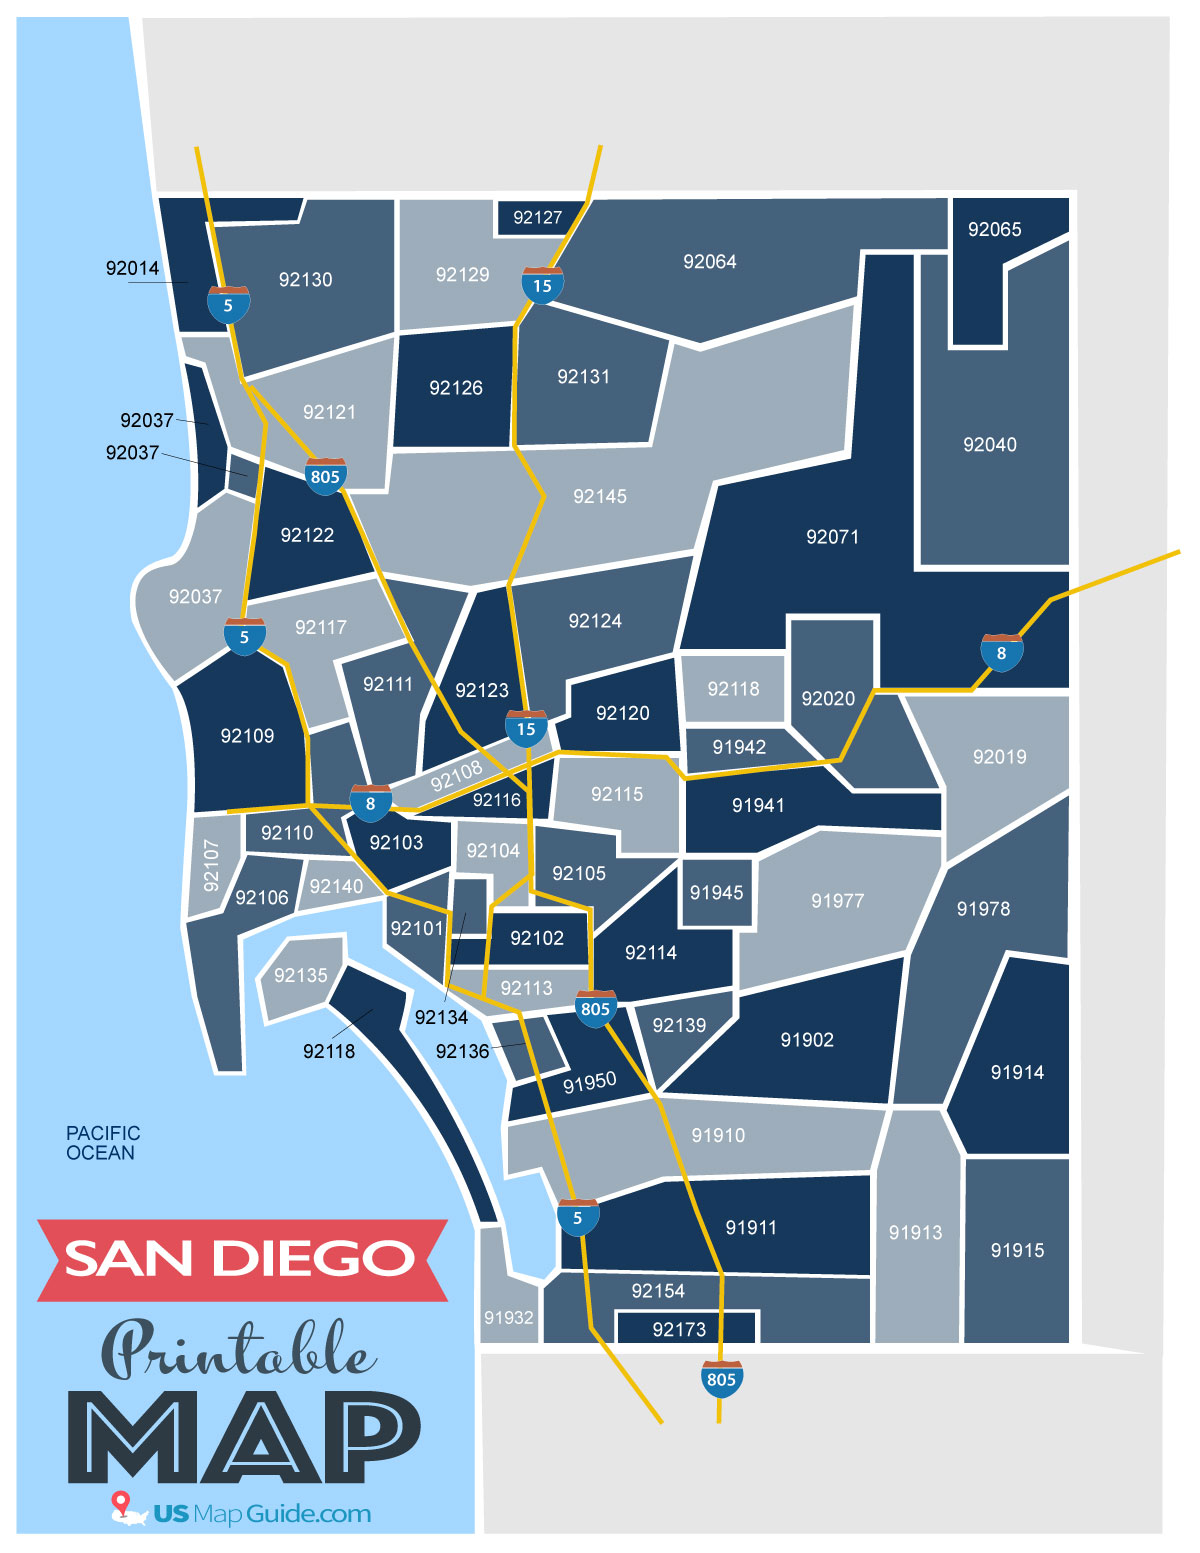 10 San Diego Zip Code Map Neighborhood Image Ideas Wallpaper | Images ...